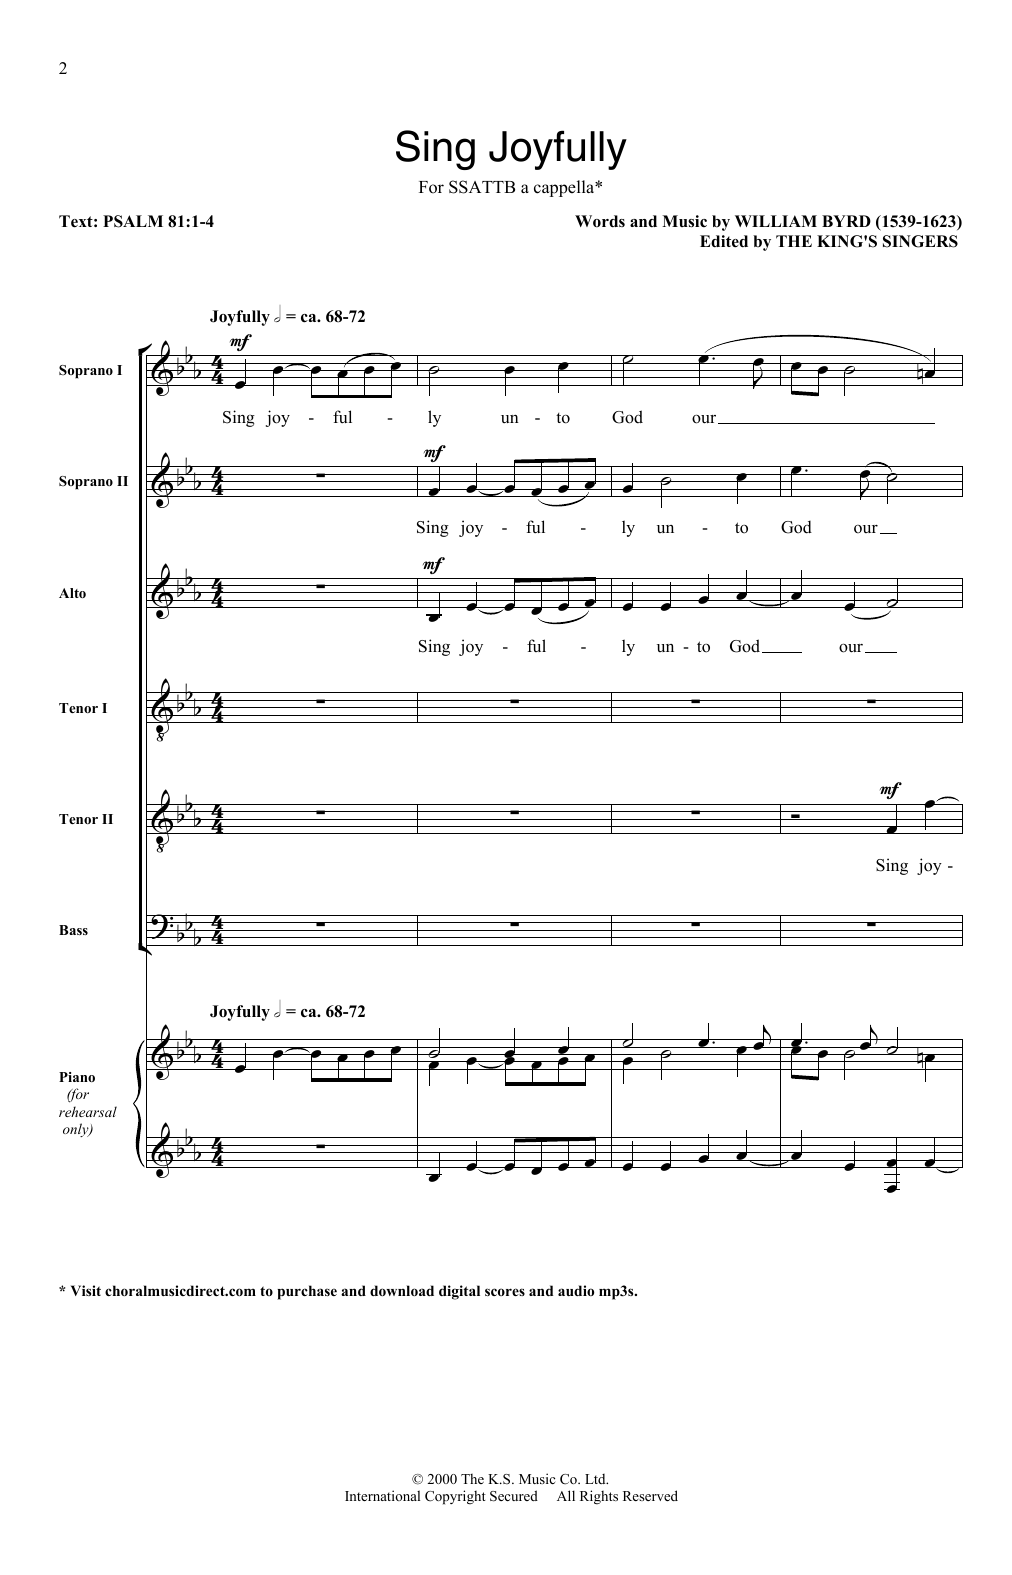 Download William Byrd Sing Joyfully Sheet Music